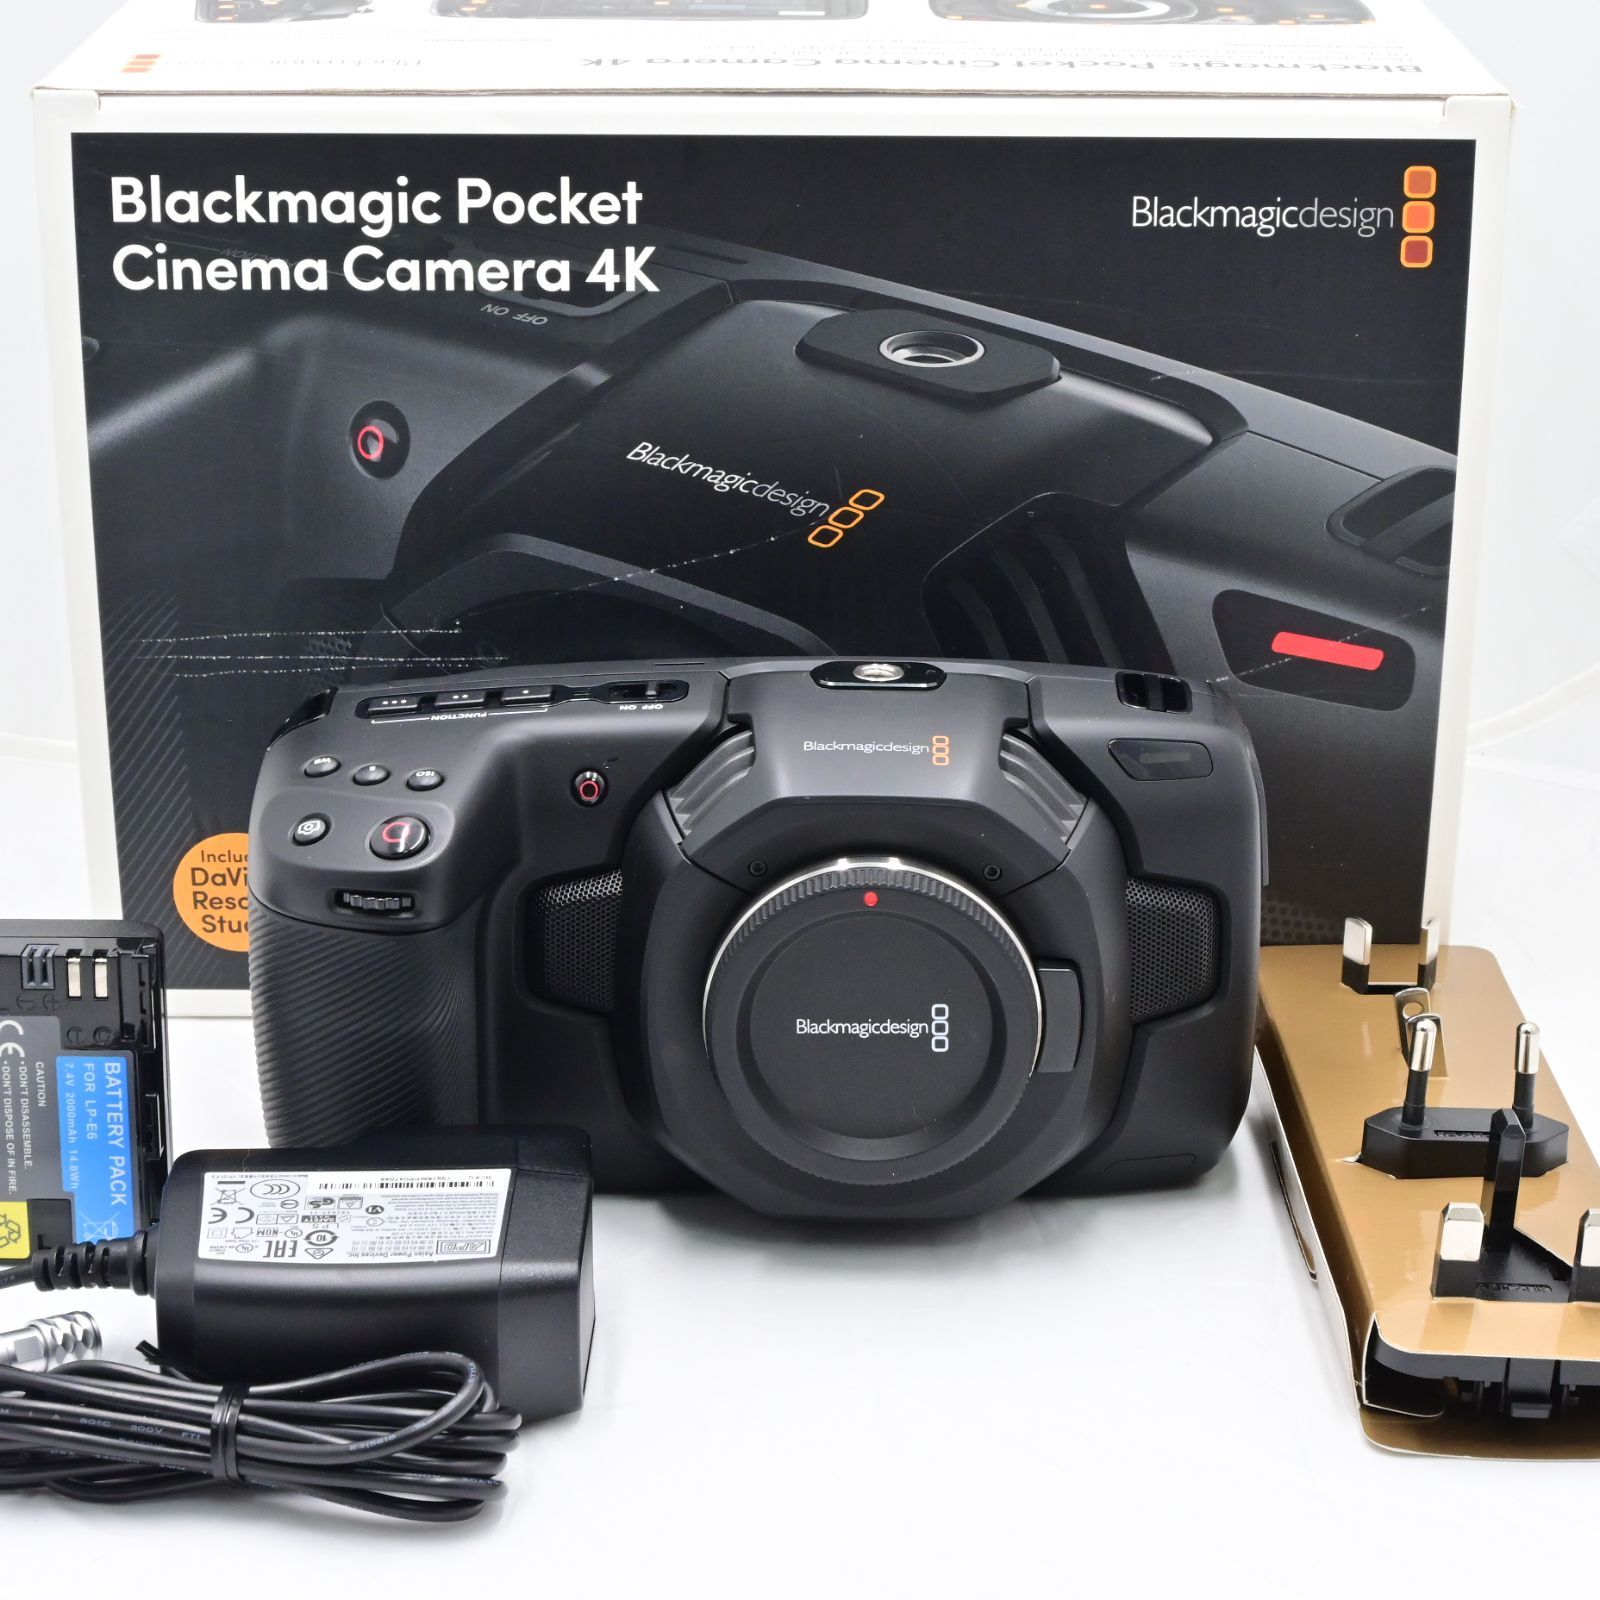 Blackmagic Design シネマカメラ Pocket Cinema Camera 4K マイクロフォーサーズマウント 4K/60p収録  CINECAMPOCHDMFT4K